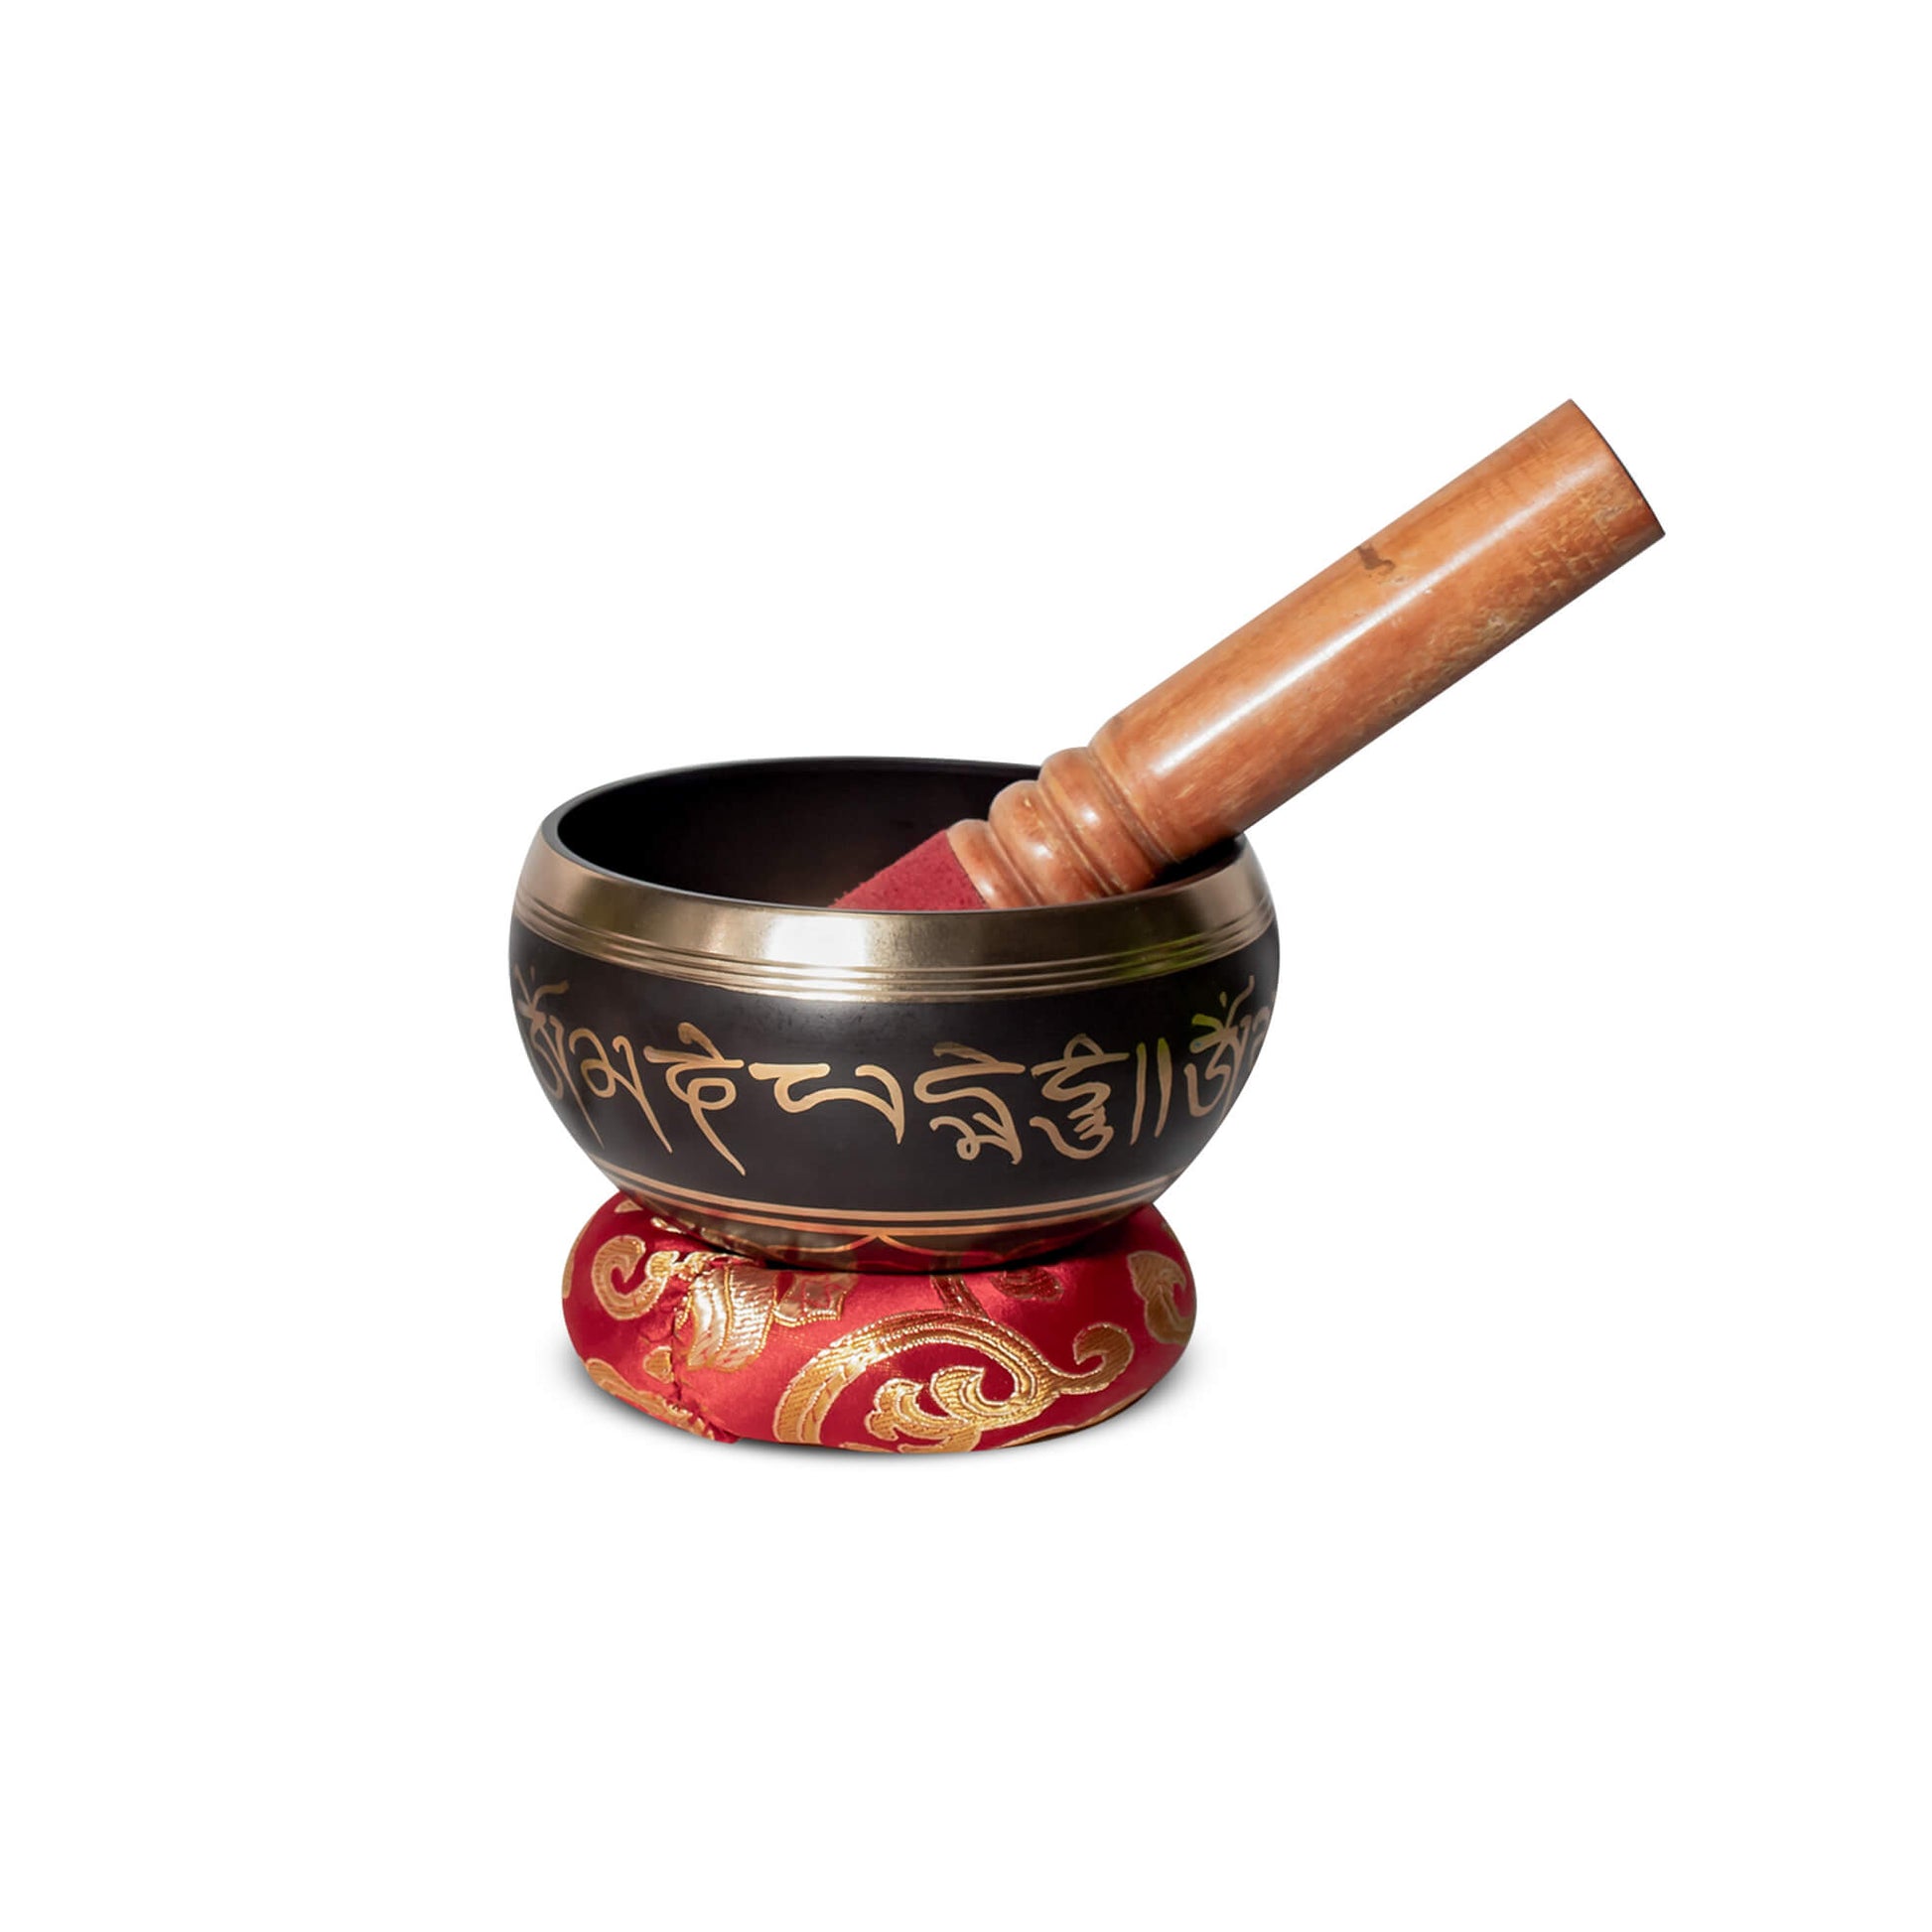 Tibetan Singing Bowl with shloka design